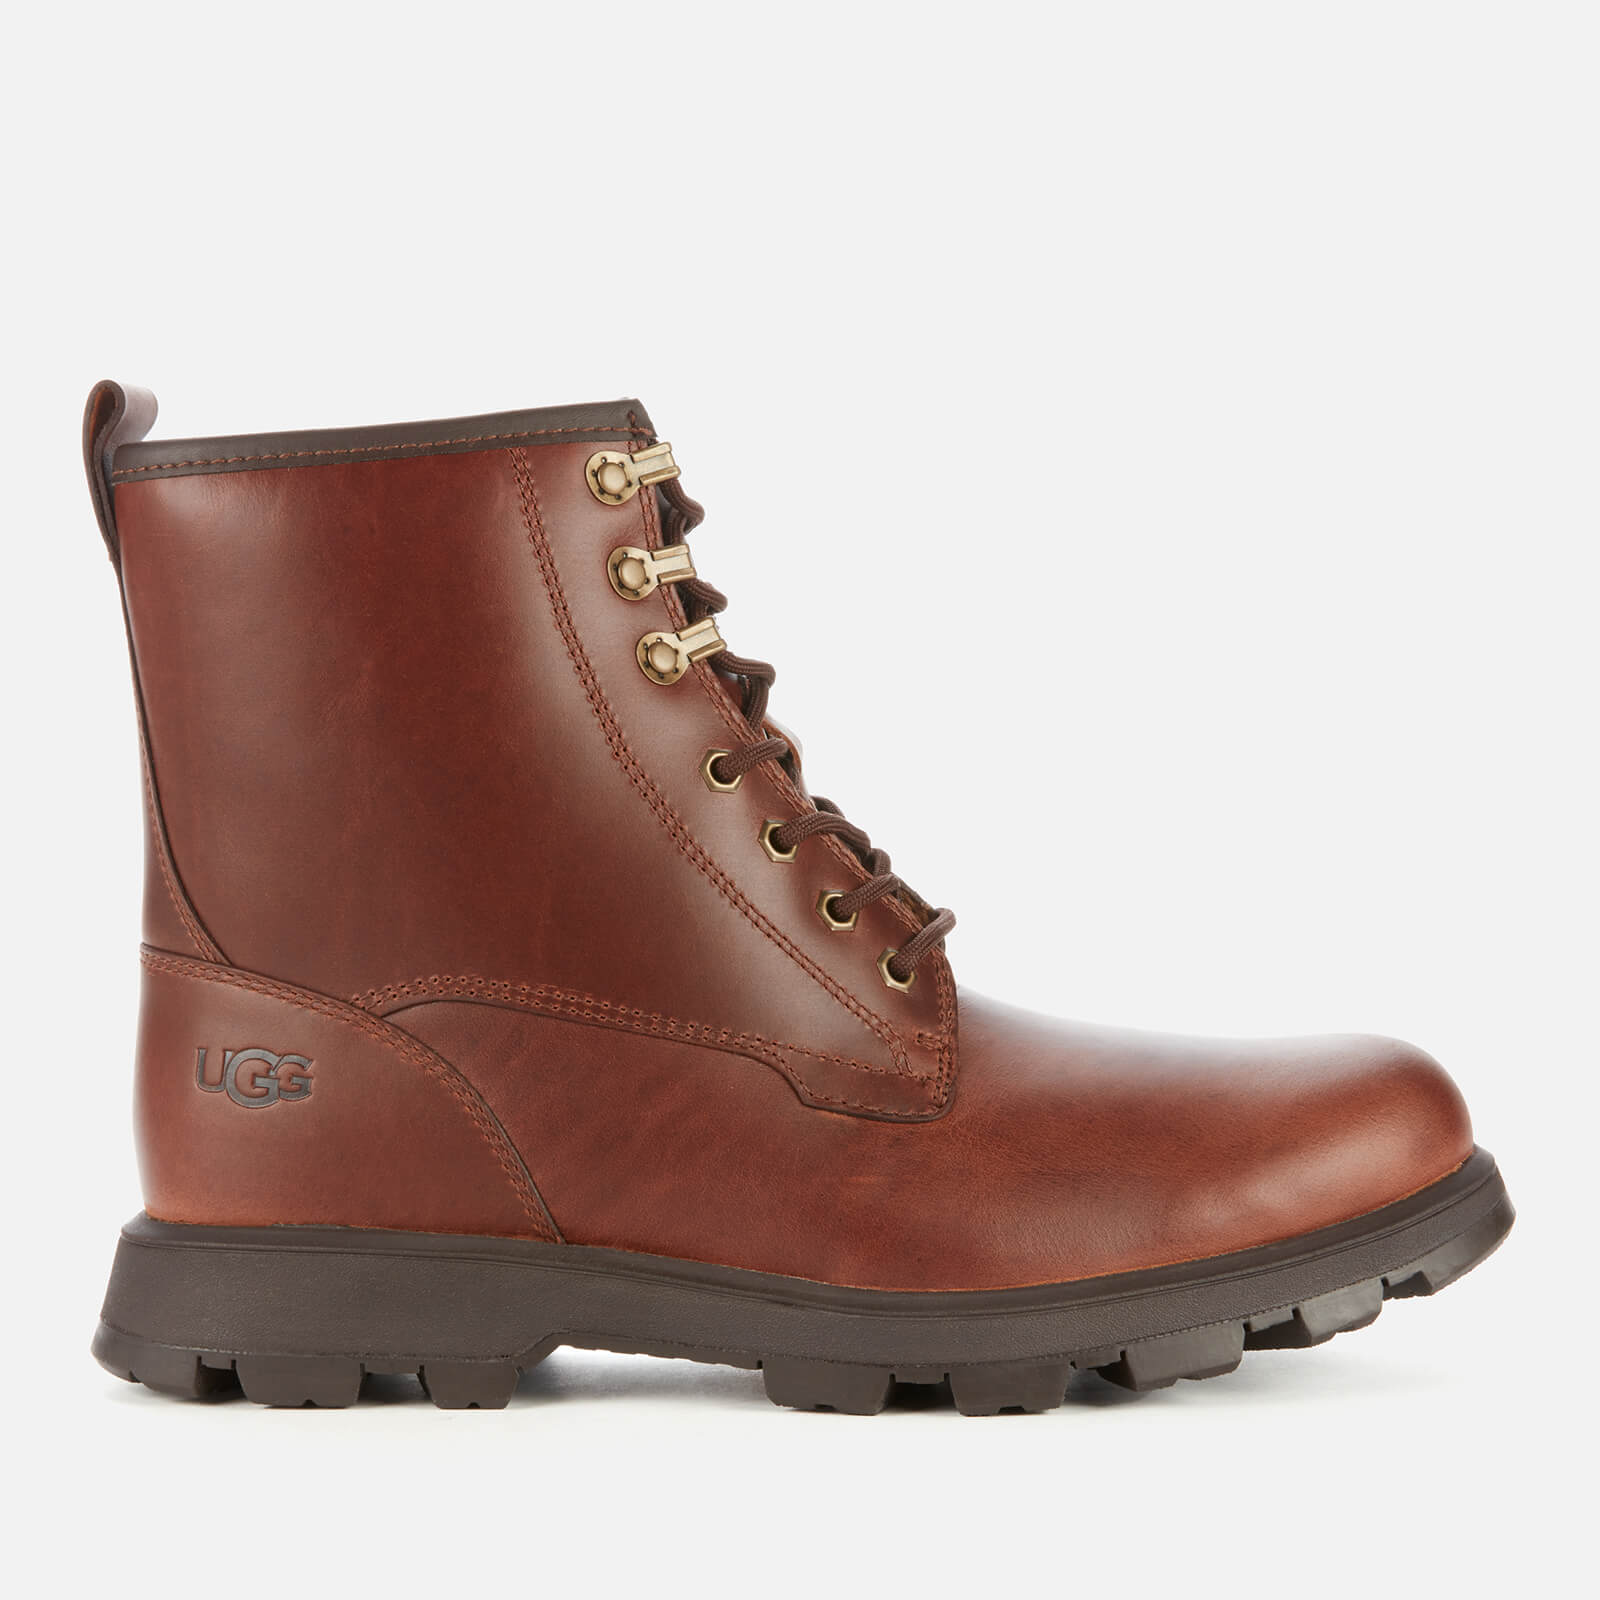 Ugg Men's Kirkson Waterproof Leather Lace Up Boots - Chestnut - Uk 10